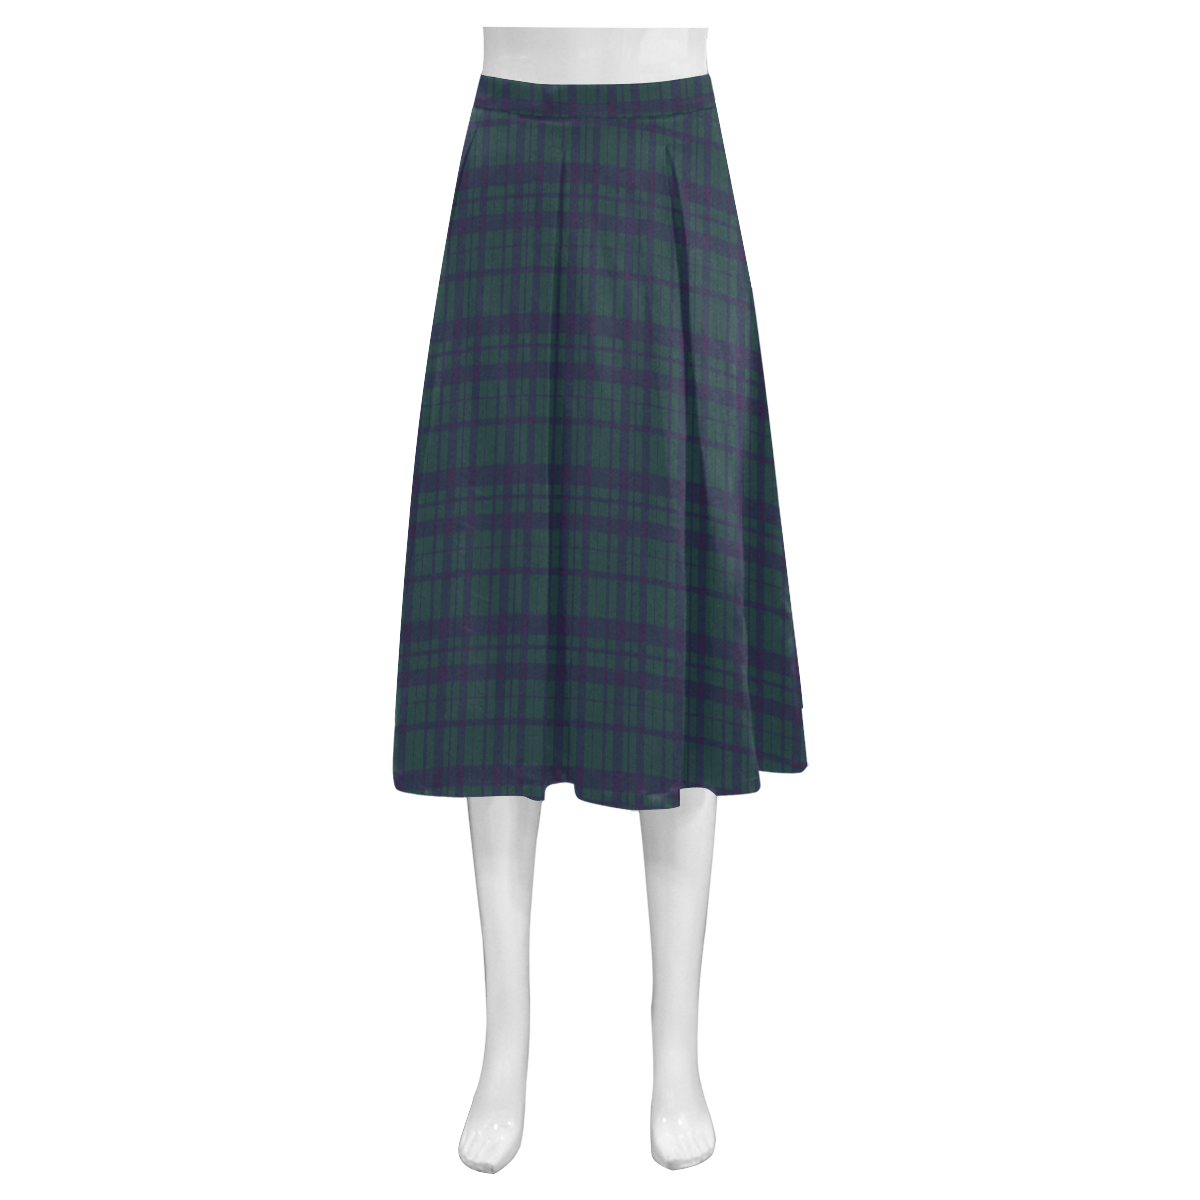 Green Plaid Rock Style Mnemosyne Women's Crepe Skirt (Model D16)